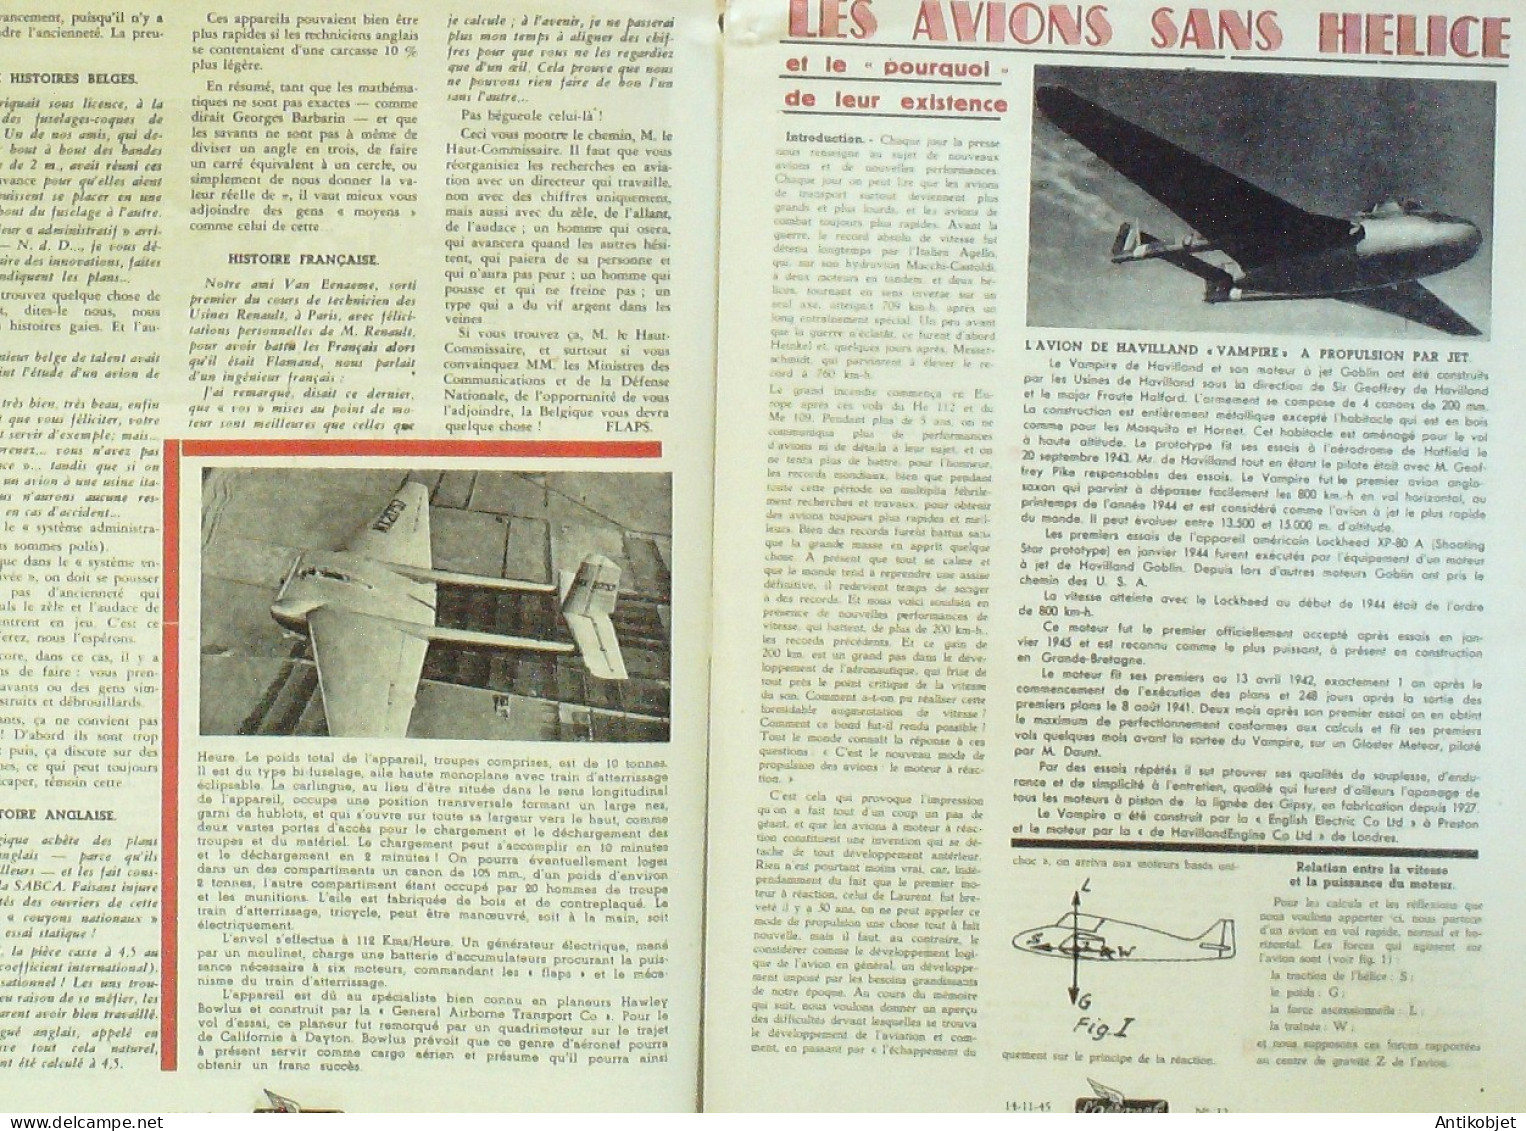 L'Aéronef 1945 N°12 Junkers 004 Wing XCG 16 Havilland Vampire - Manuals